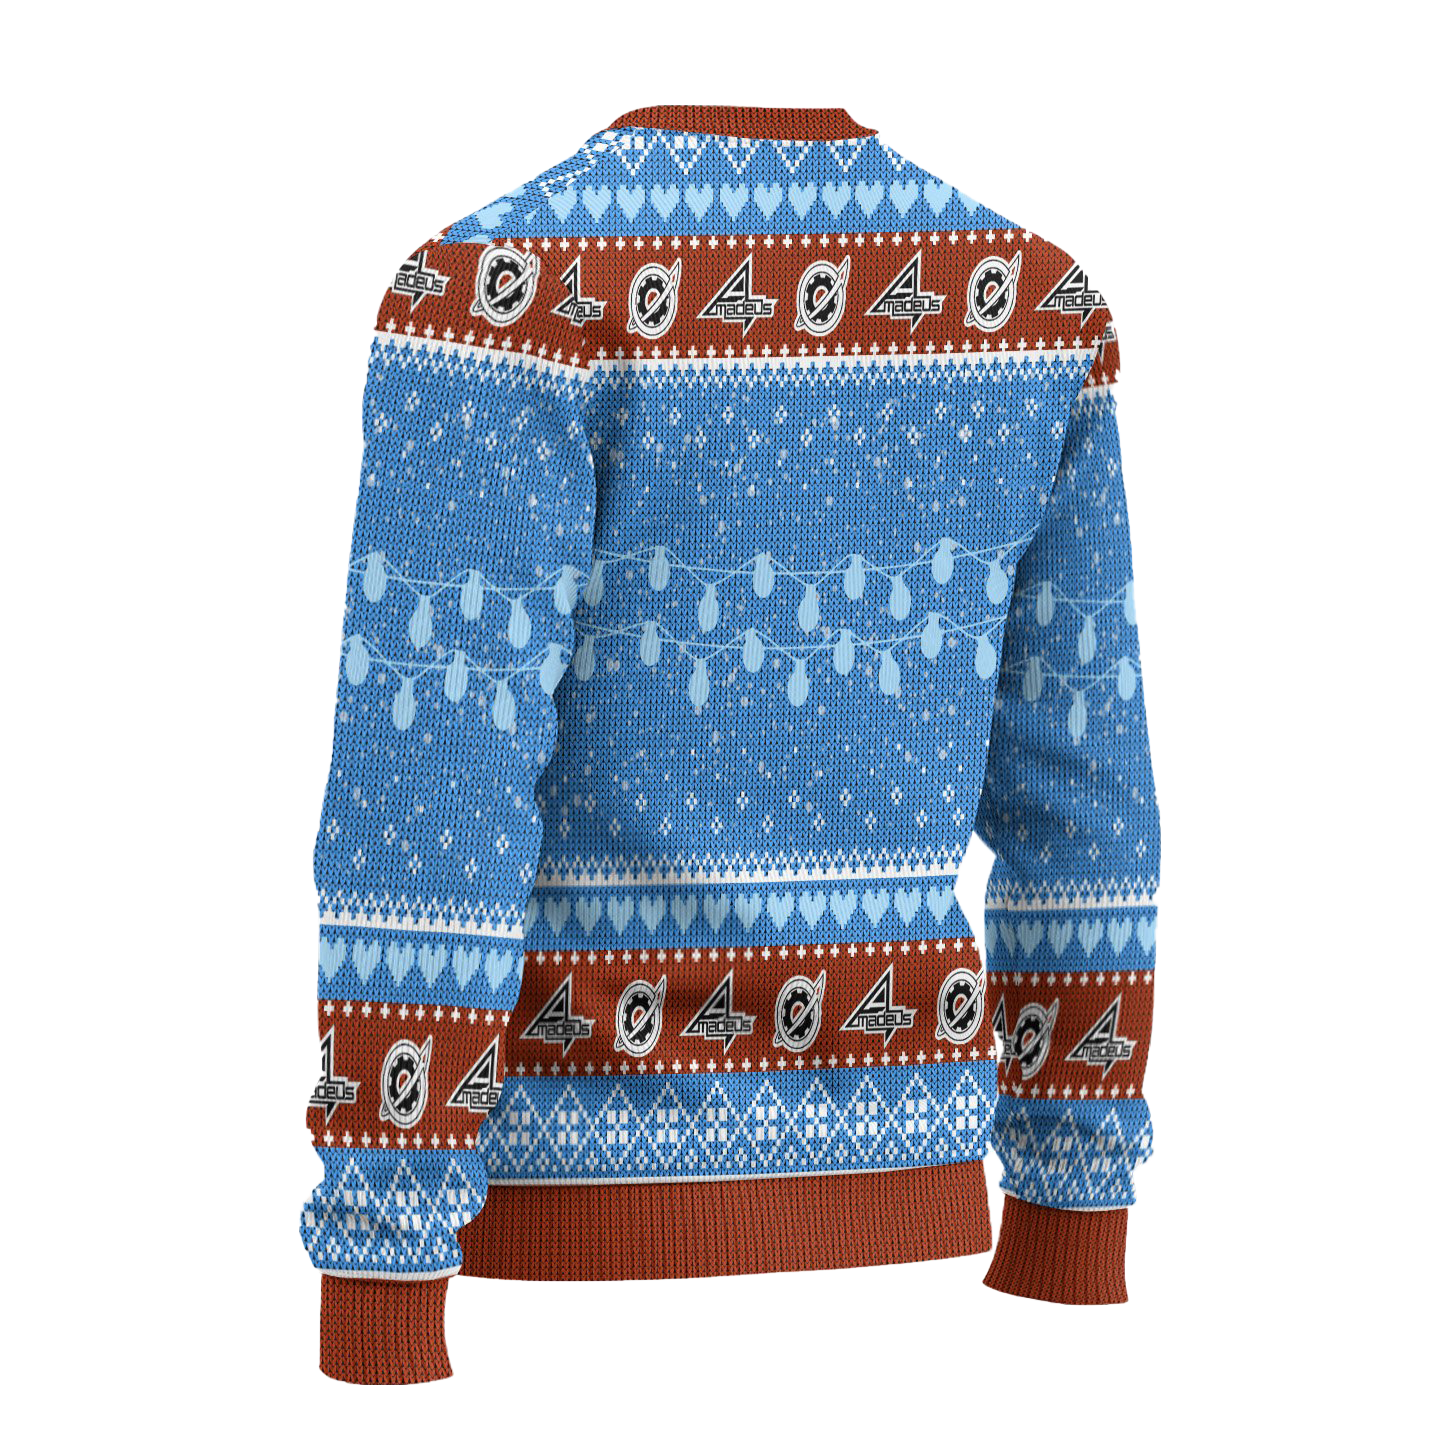 Mayuri x Kurisu Anime Ugly Christmas Sweater Custom Steins Gate Xmas Gift